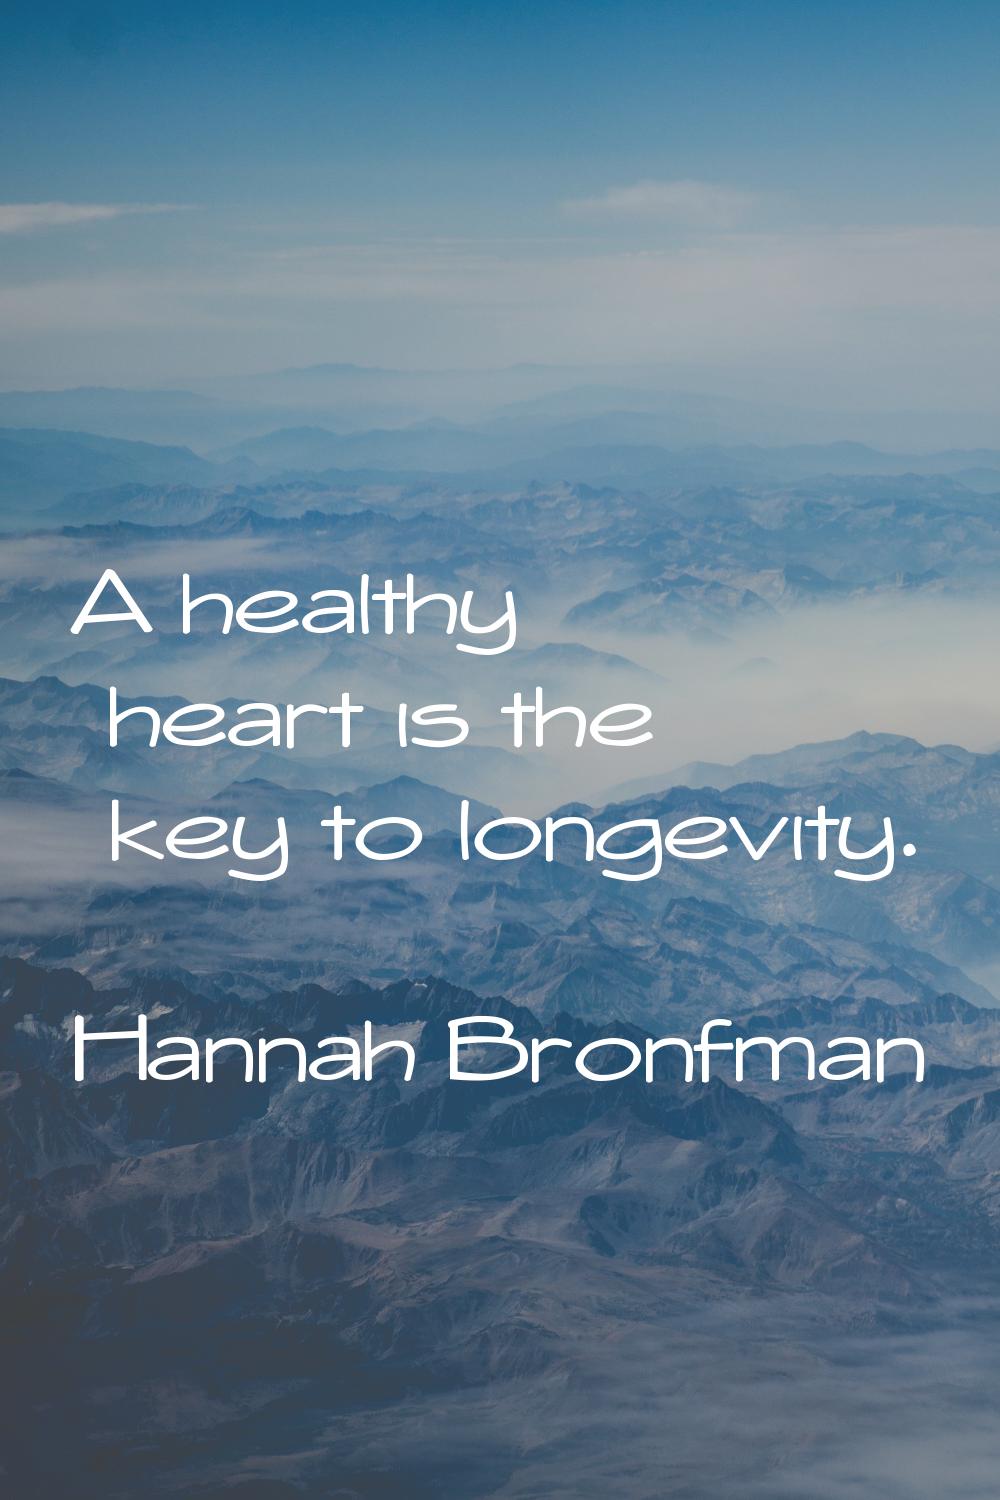 A healthy heart is the key to longevity.